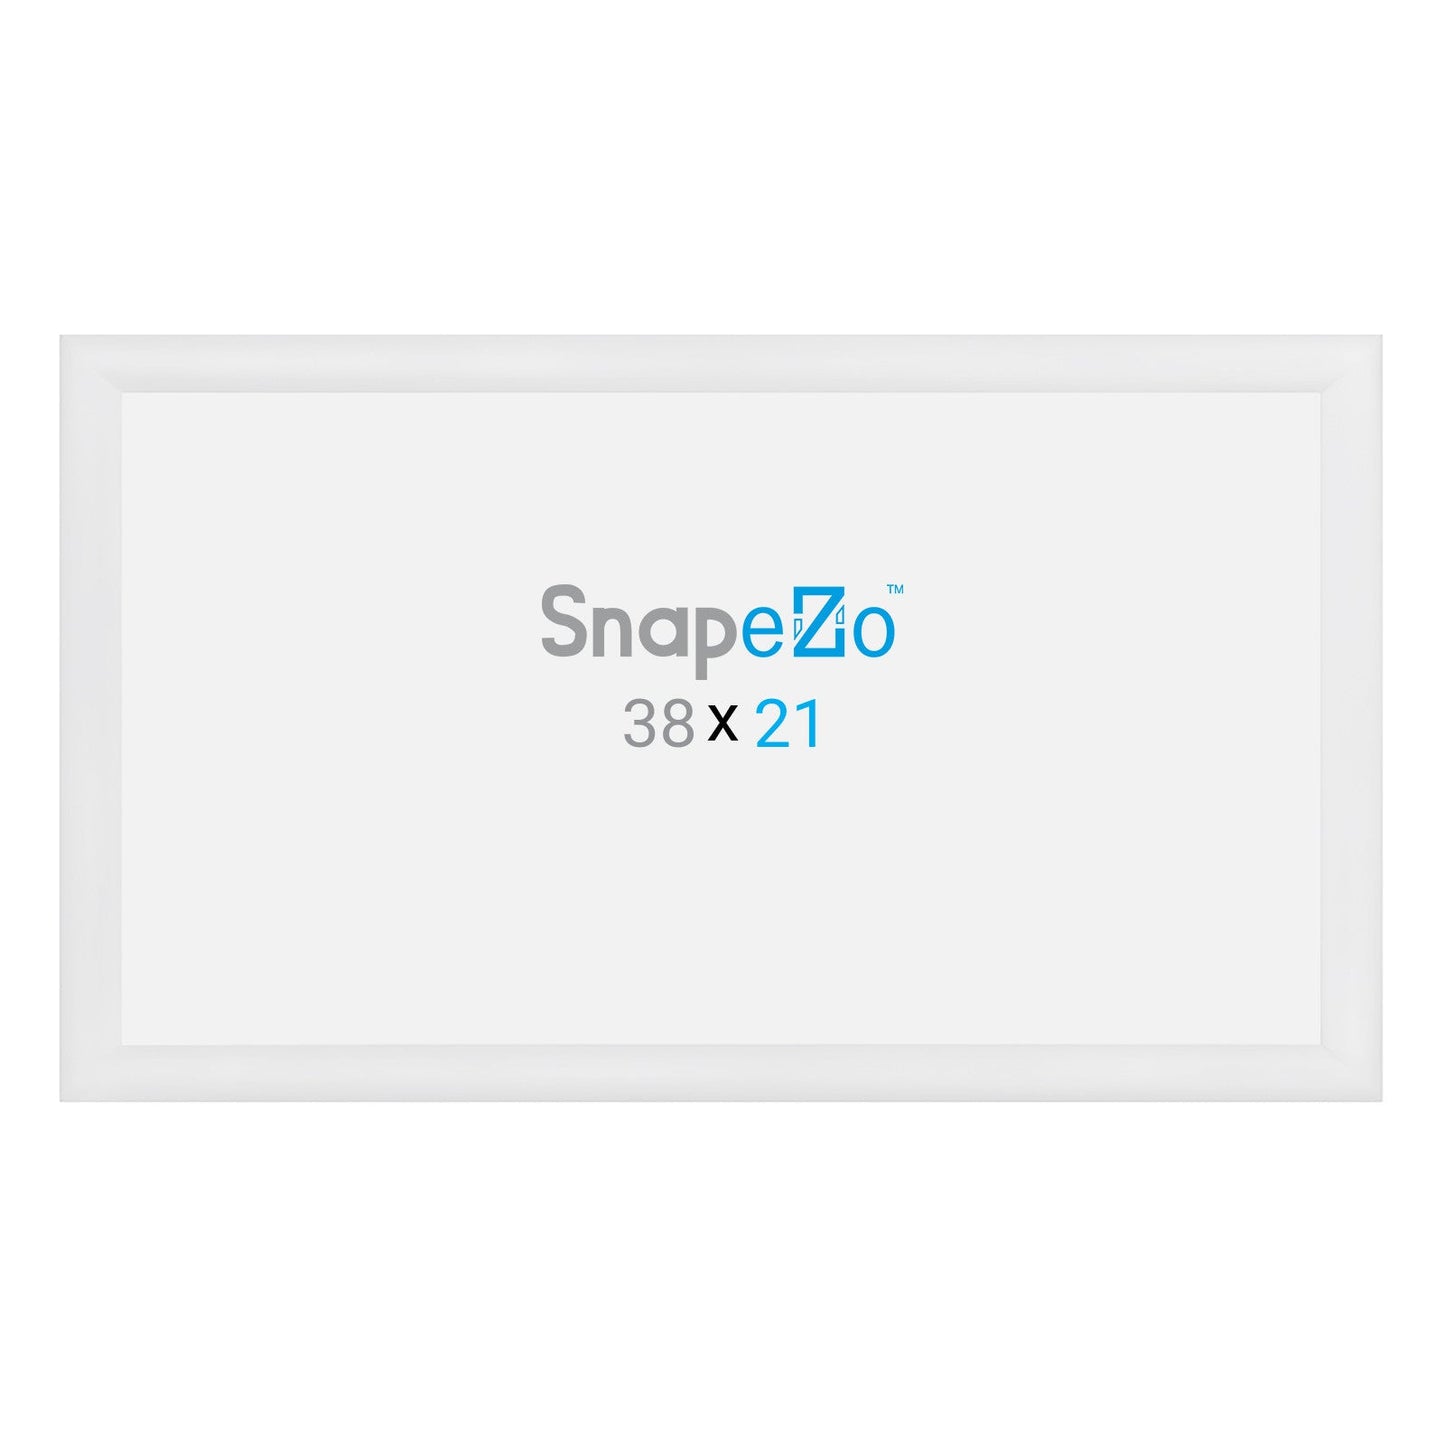 21x38 White SnapeZo® Snap Frame - 1.2" Profile - Snap Frames Direct